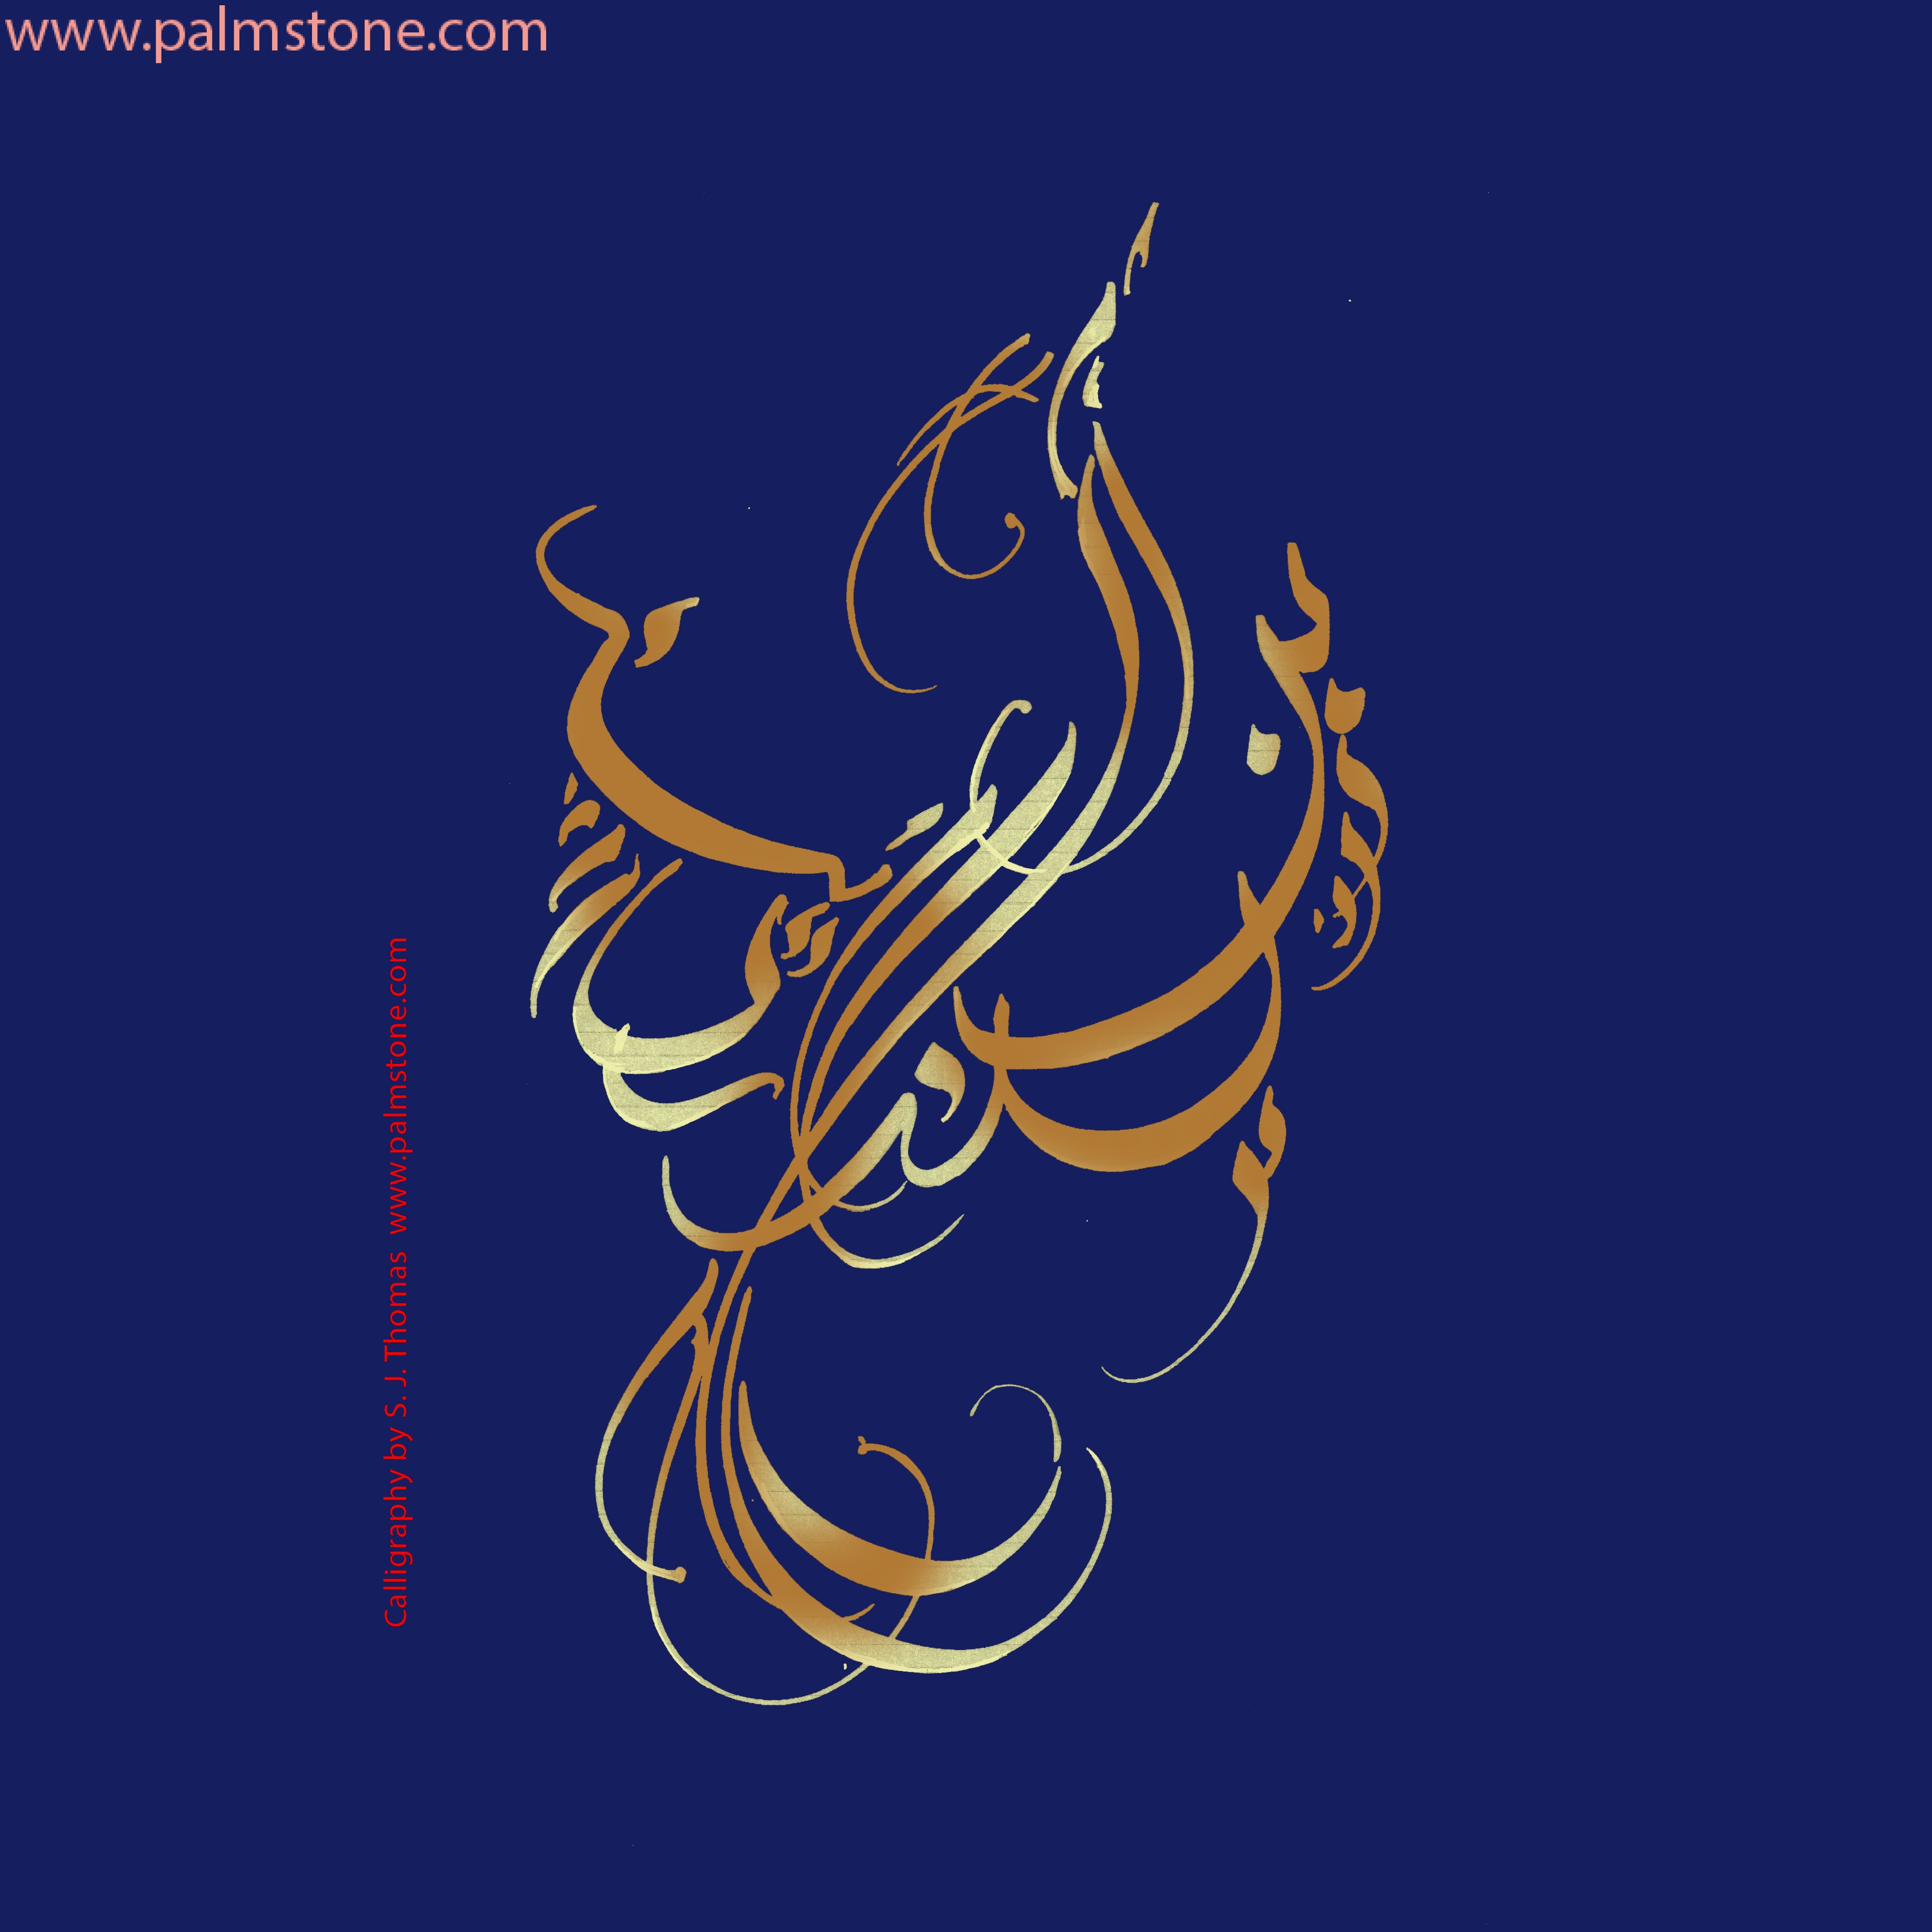 Zoomorphic Persian / Farsi Calligraphy zoomorphic calligraphy Phoenix Simurgh